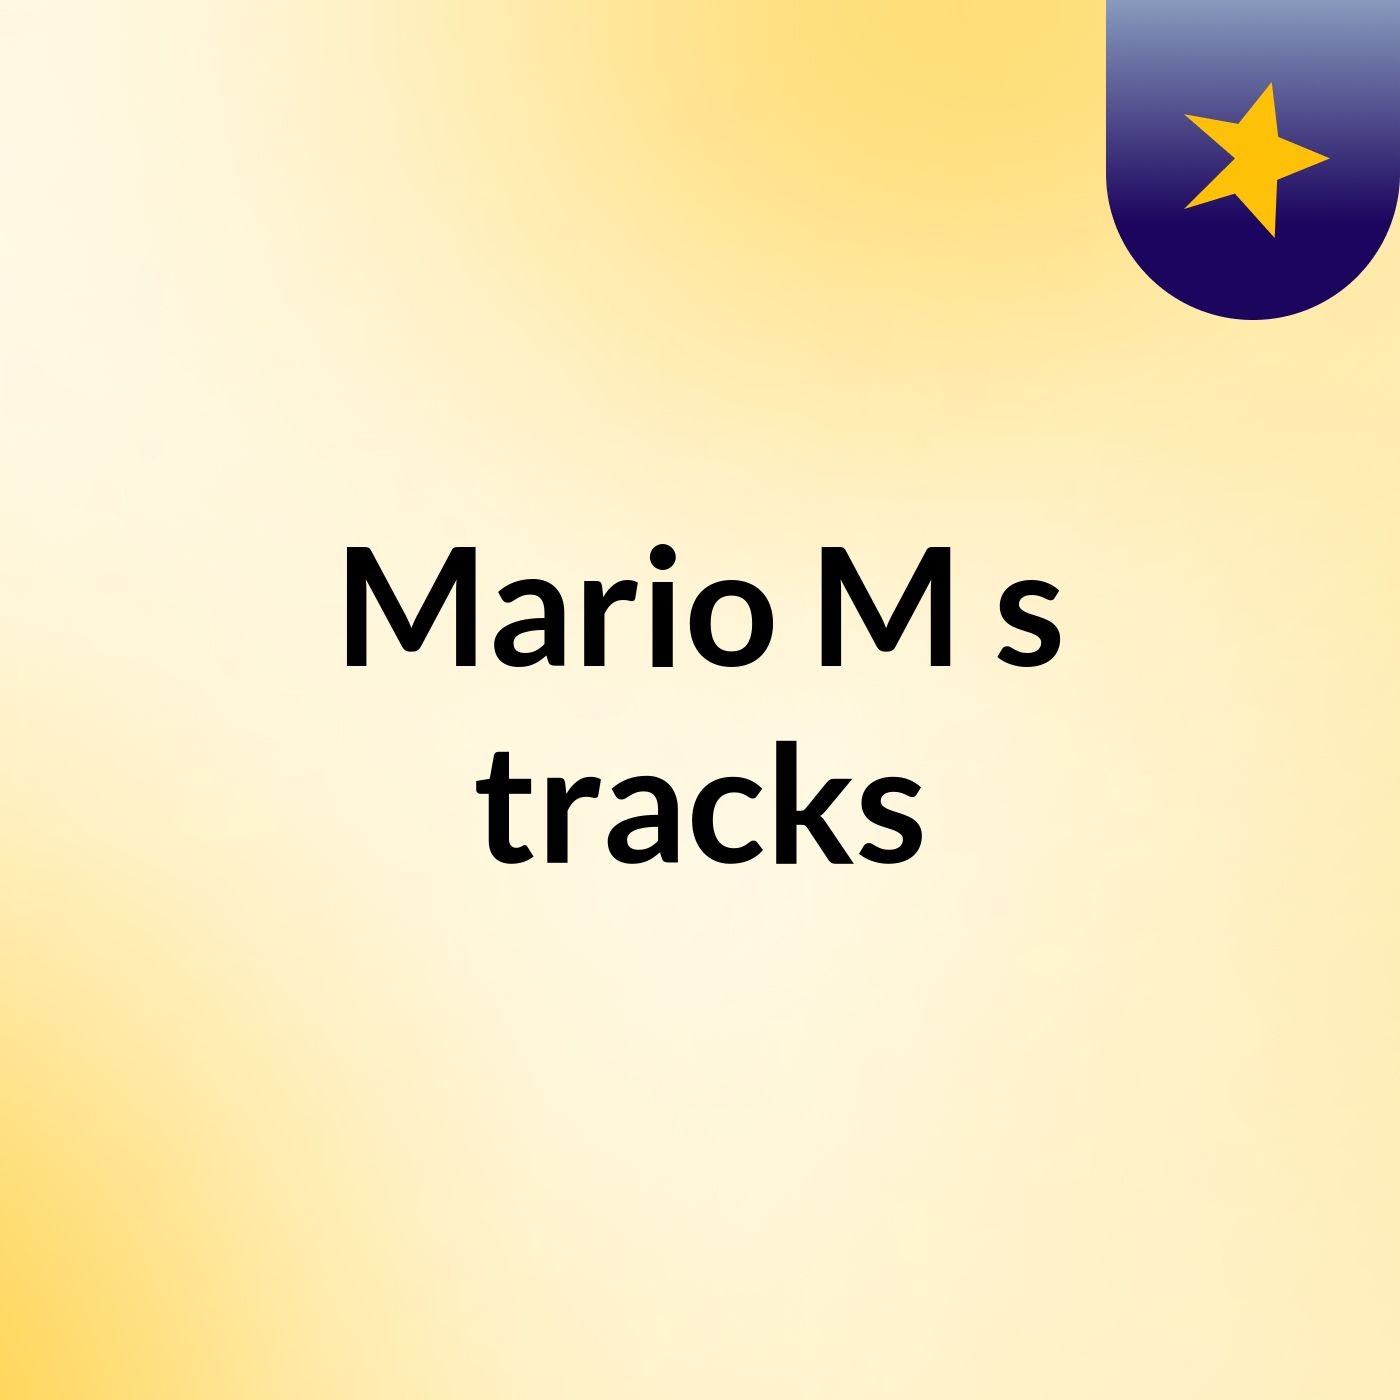 Mario M's tracks